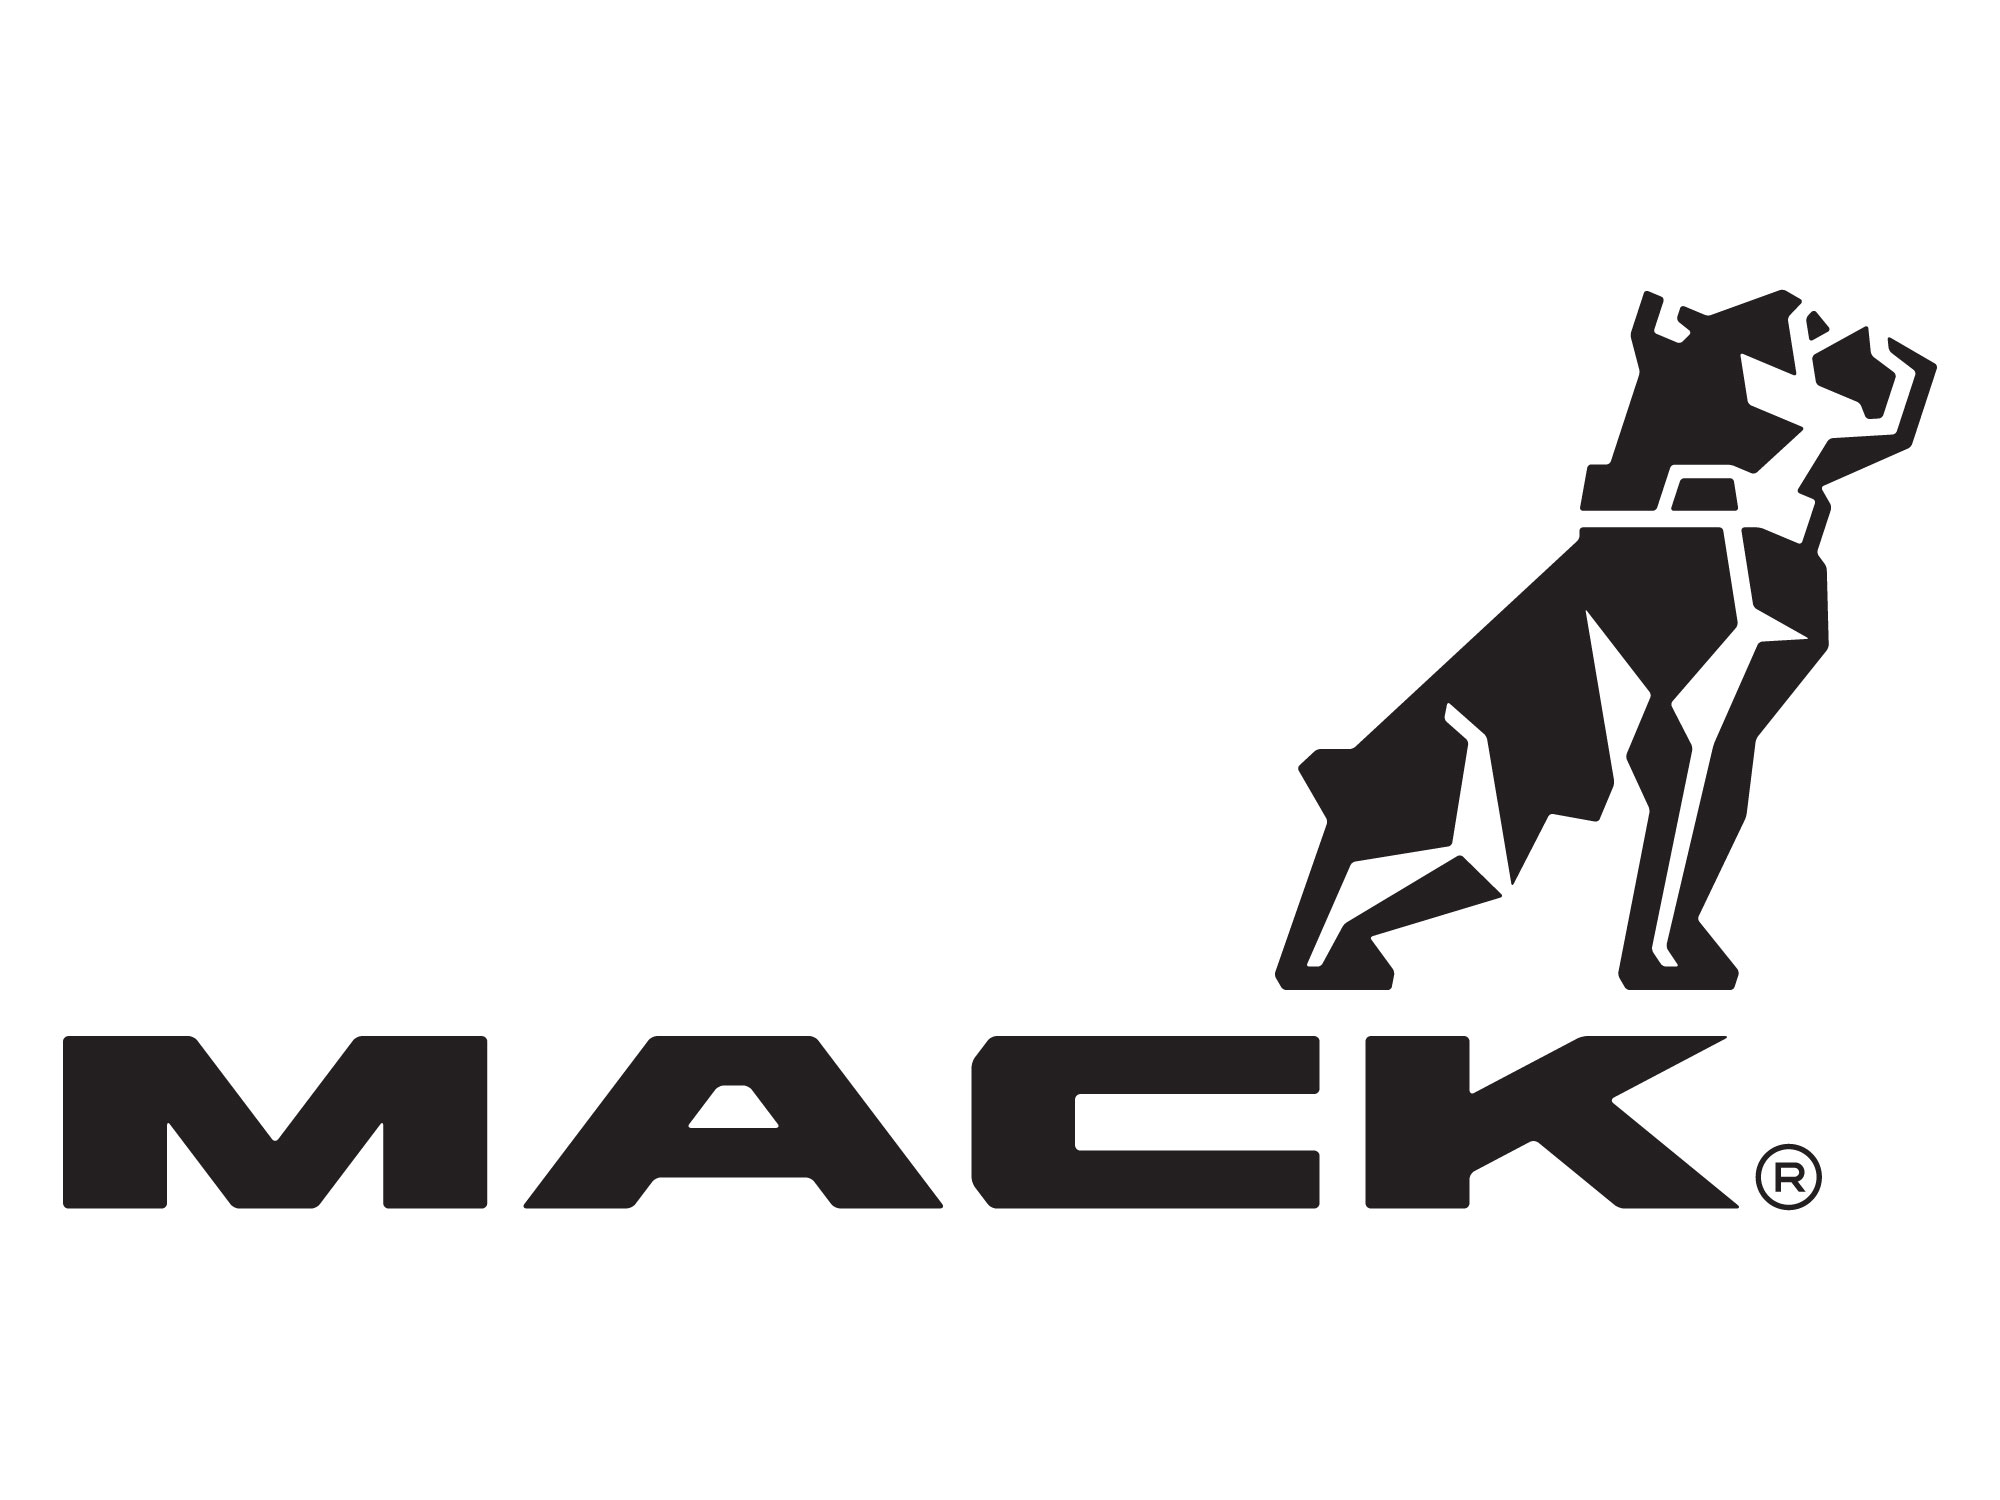 Mack's Logo - Mack announces rebranding effort, new logo at ConExpo